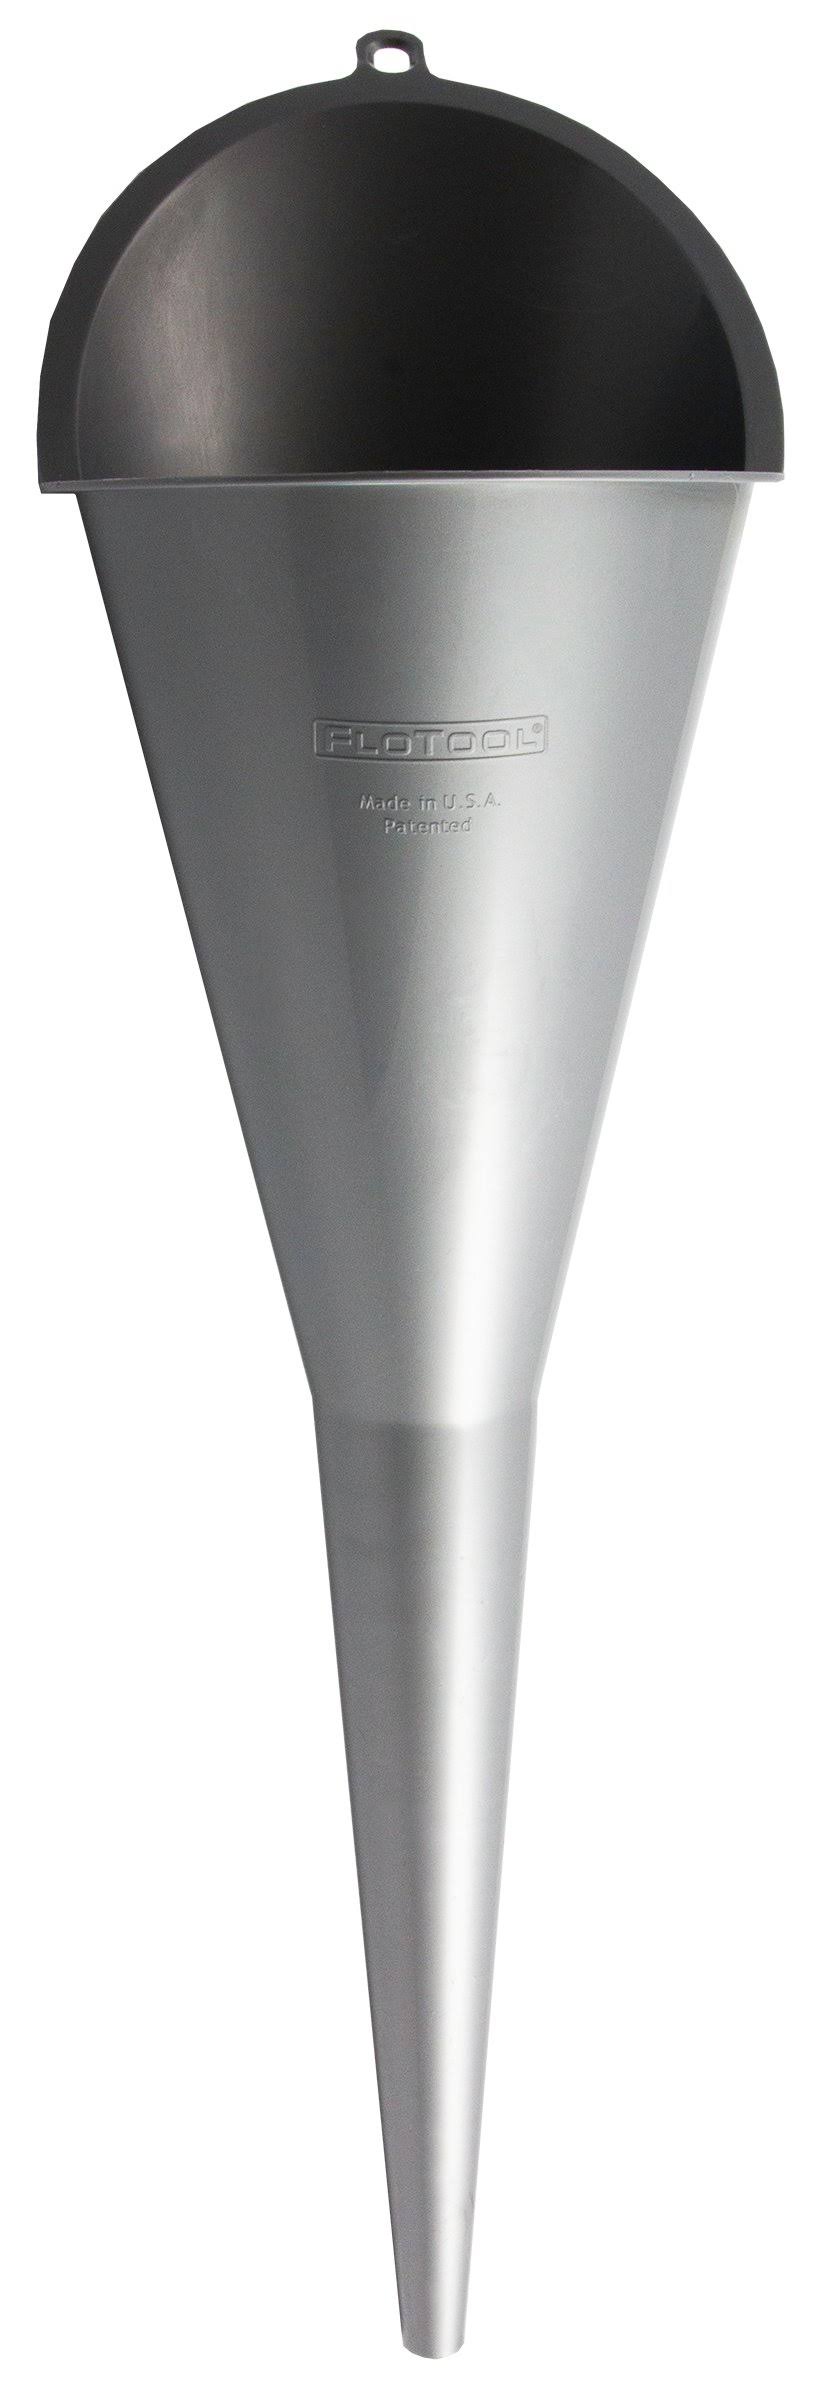 Hopkins FloTool 10712 Super Multi-purpose Funnel - Gray, 18cm